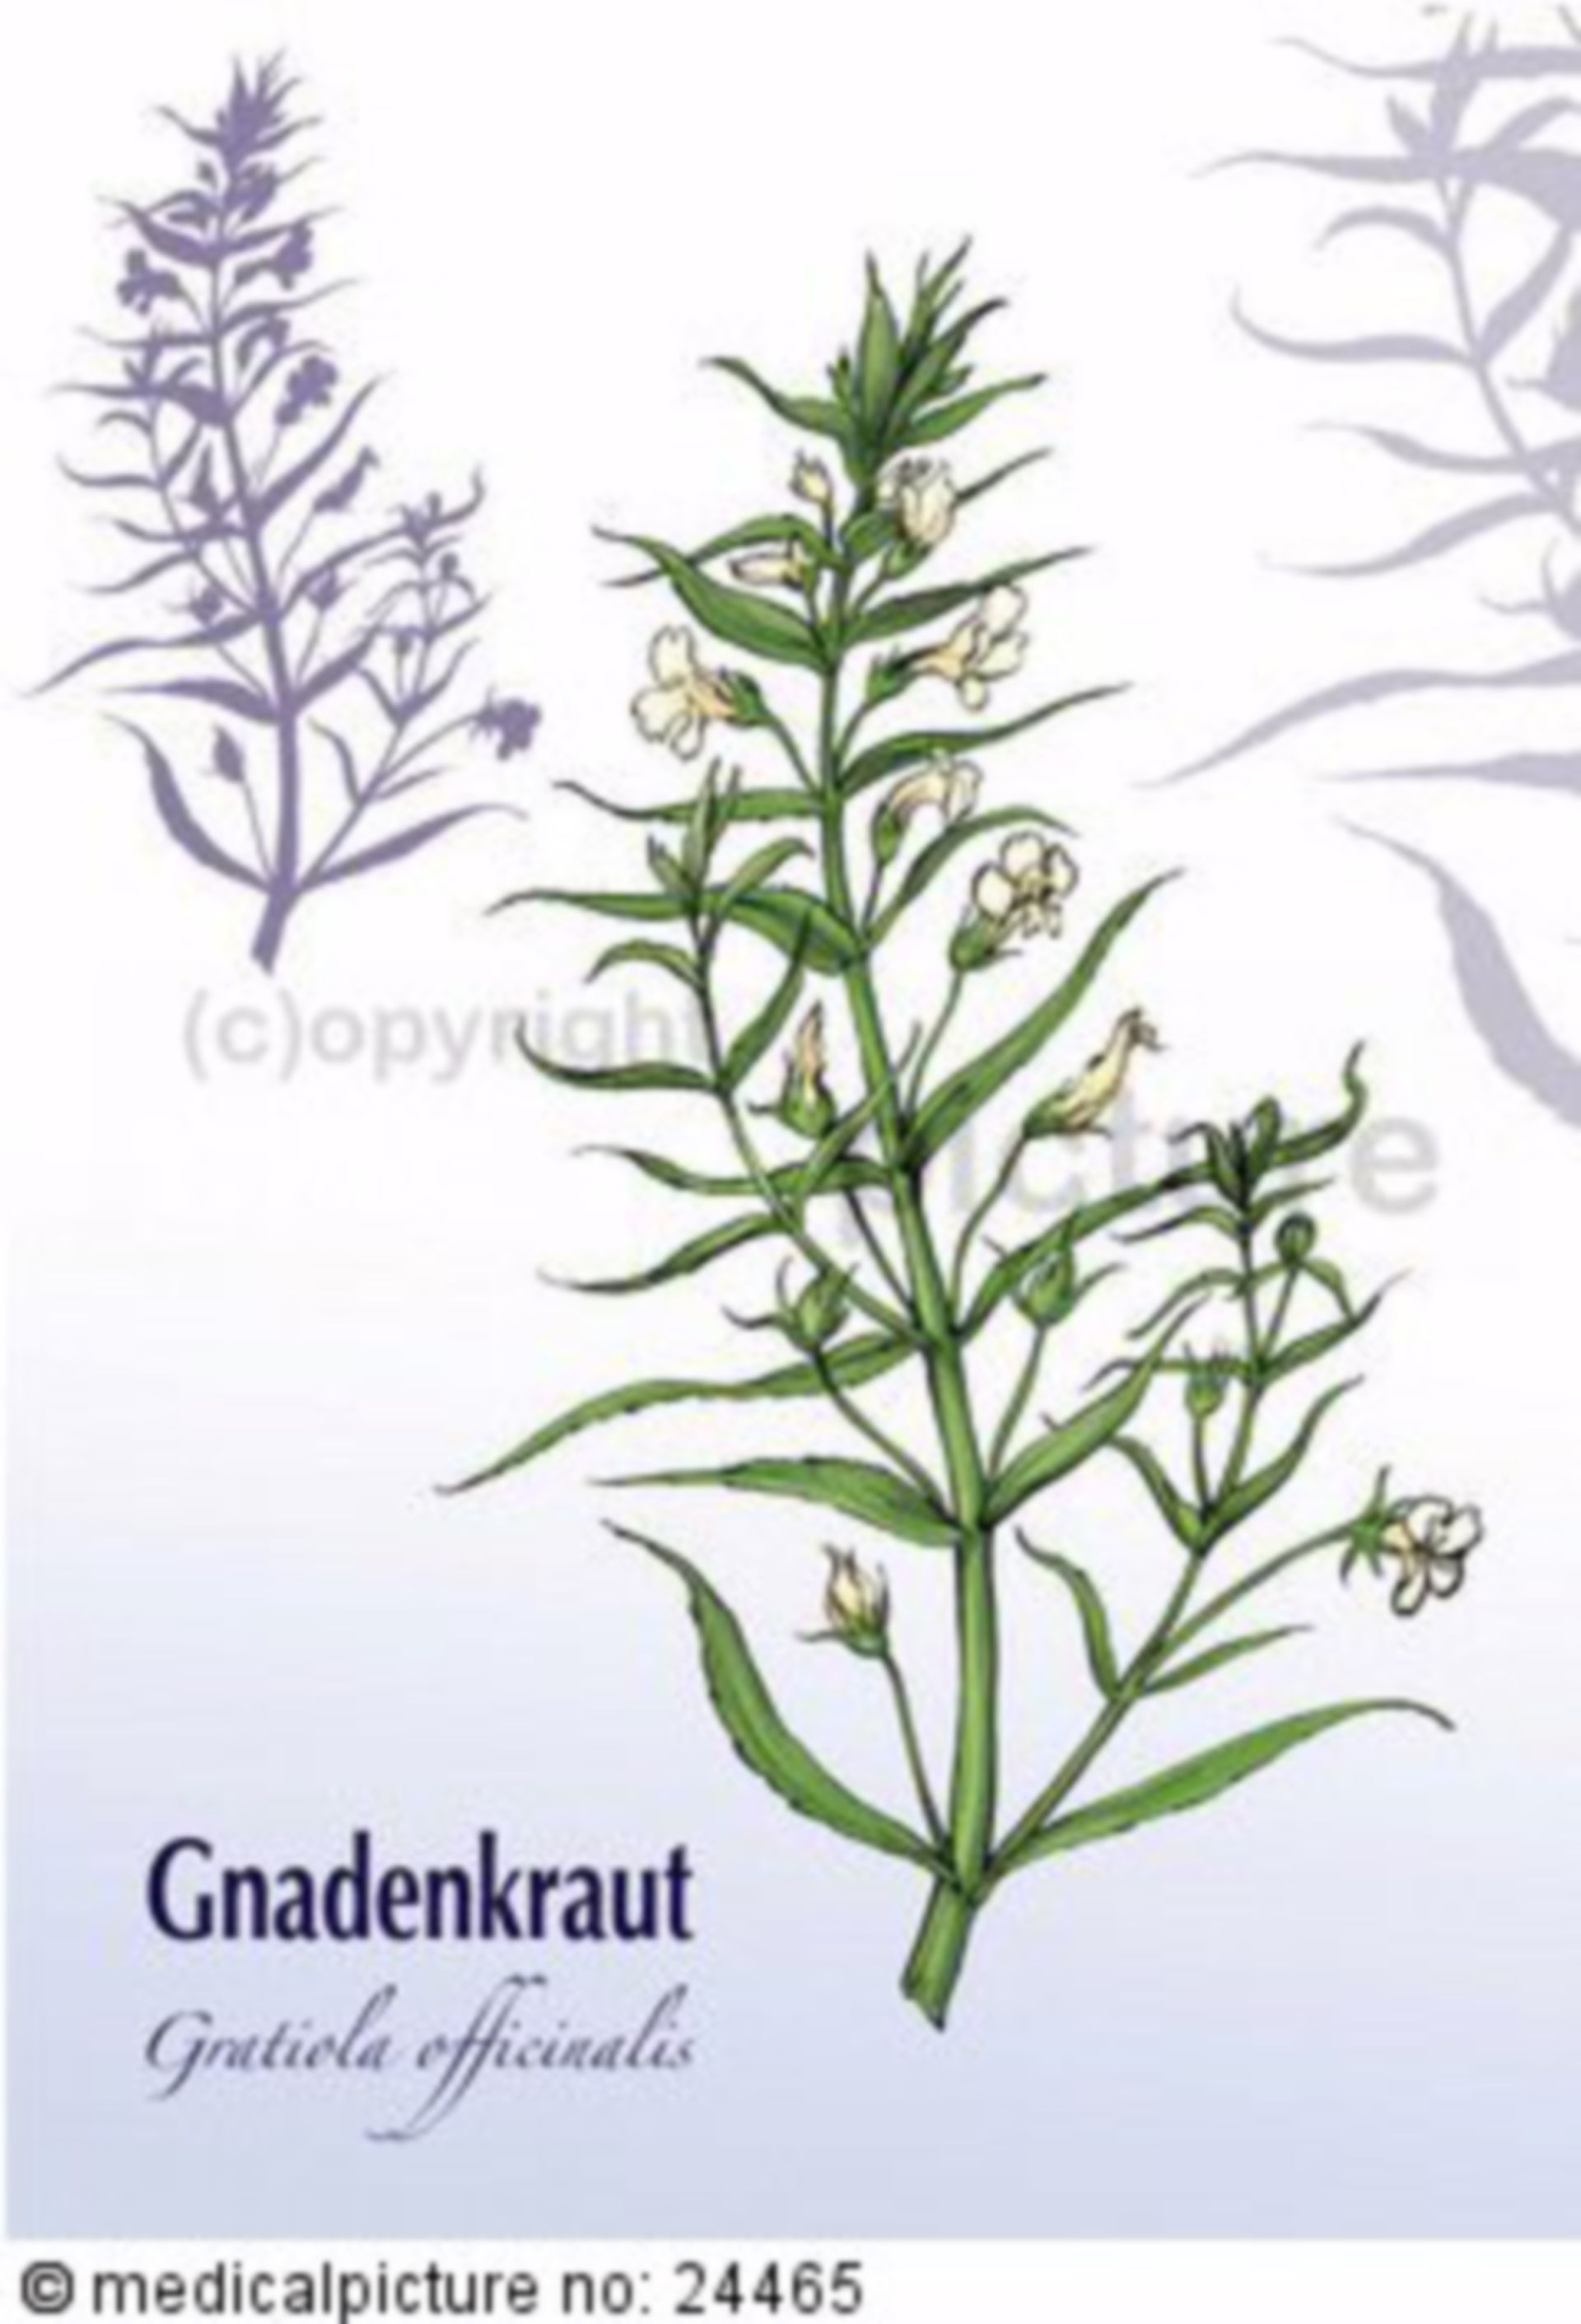  Gnadenkraut, Gratiola officinalis 
